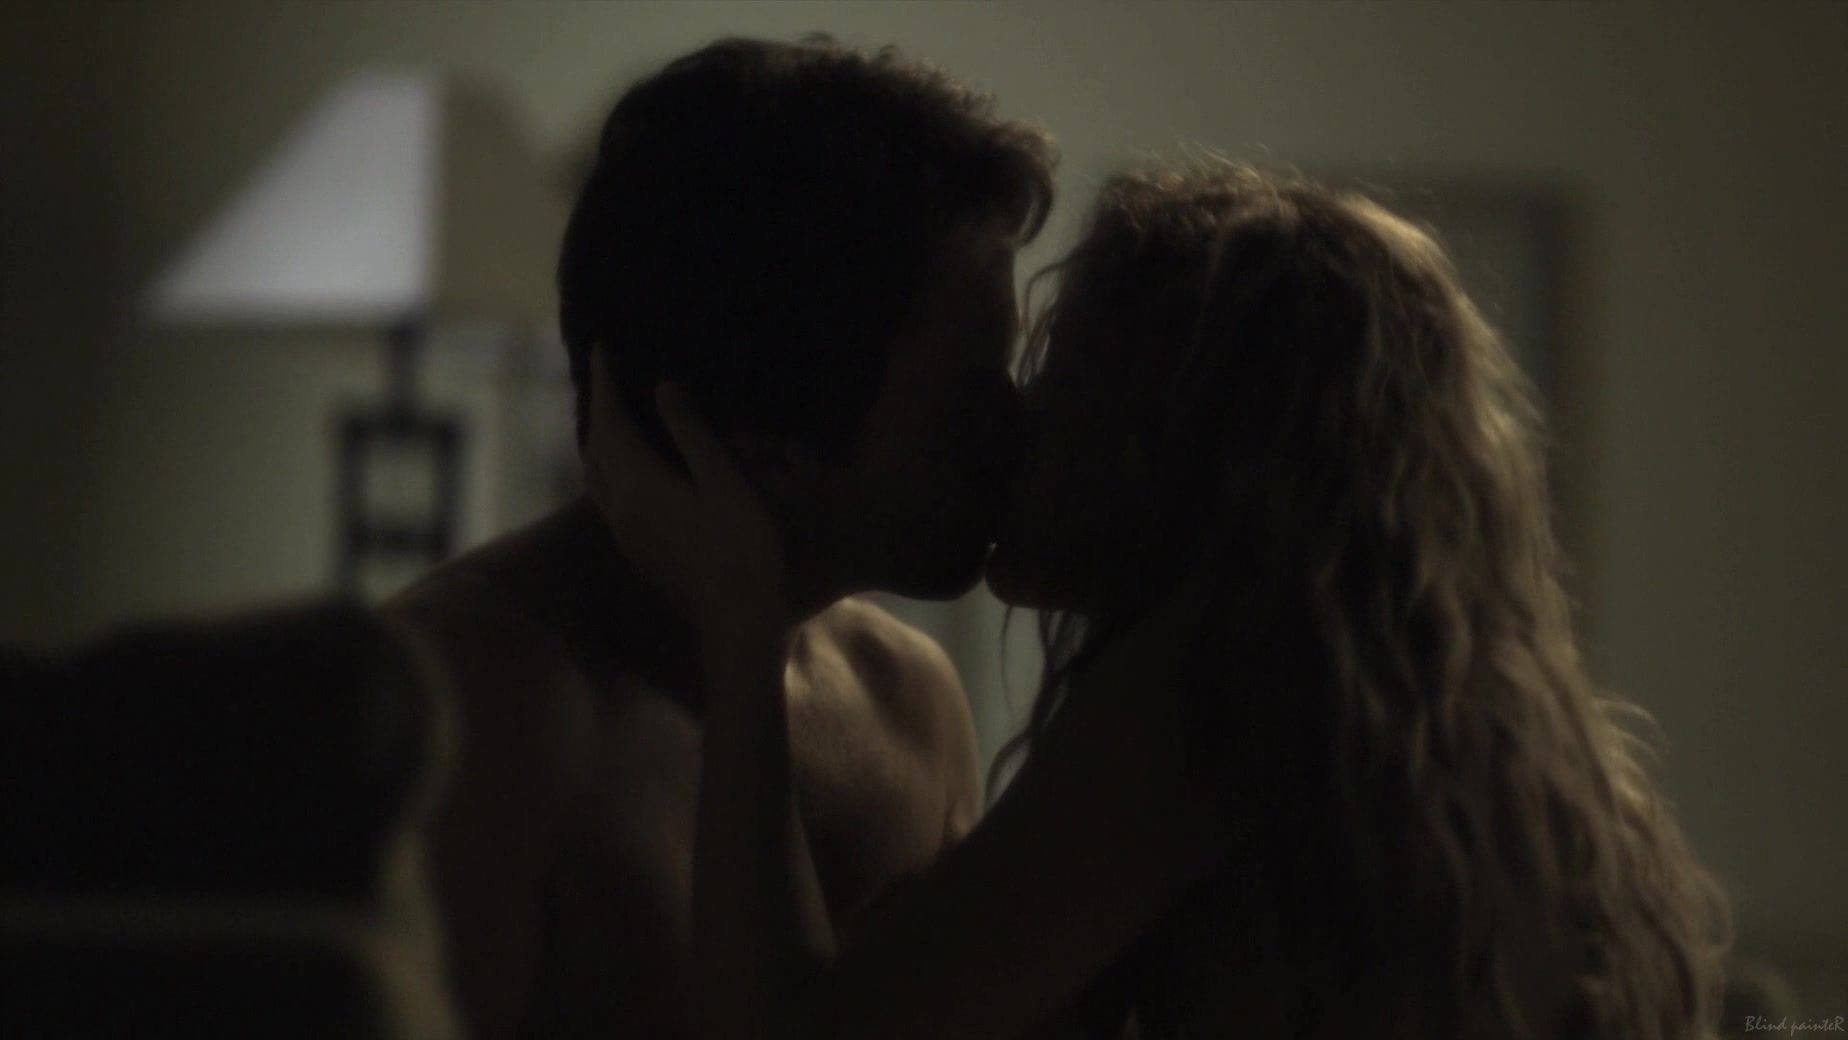 Chile Sex video Rachelle Lefevre nude scene - The Caller (2011) Harcore